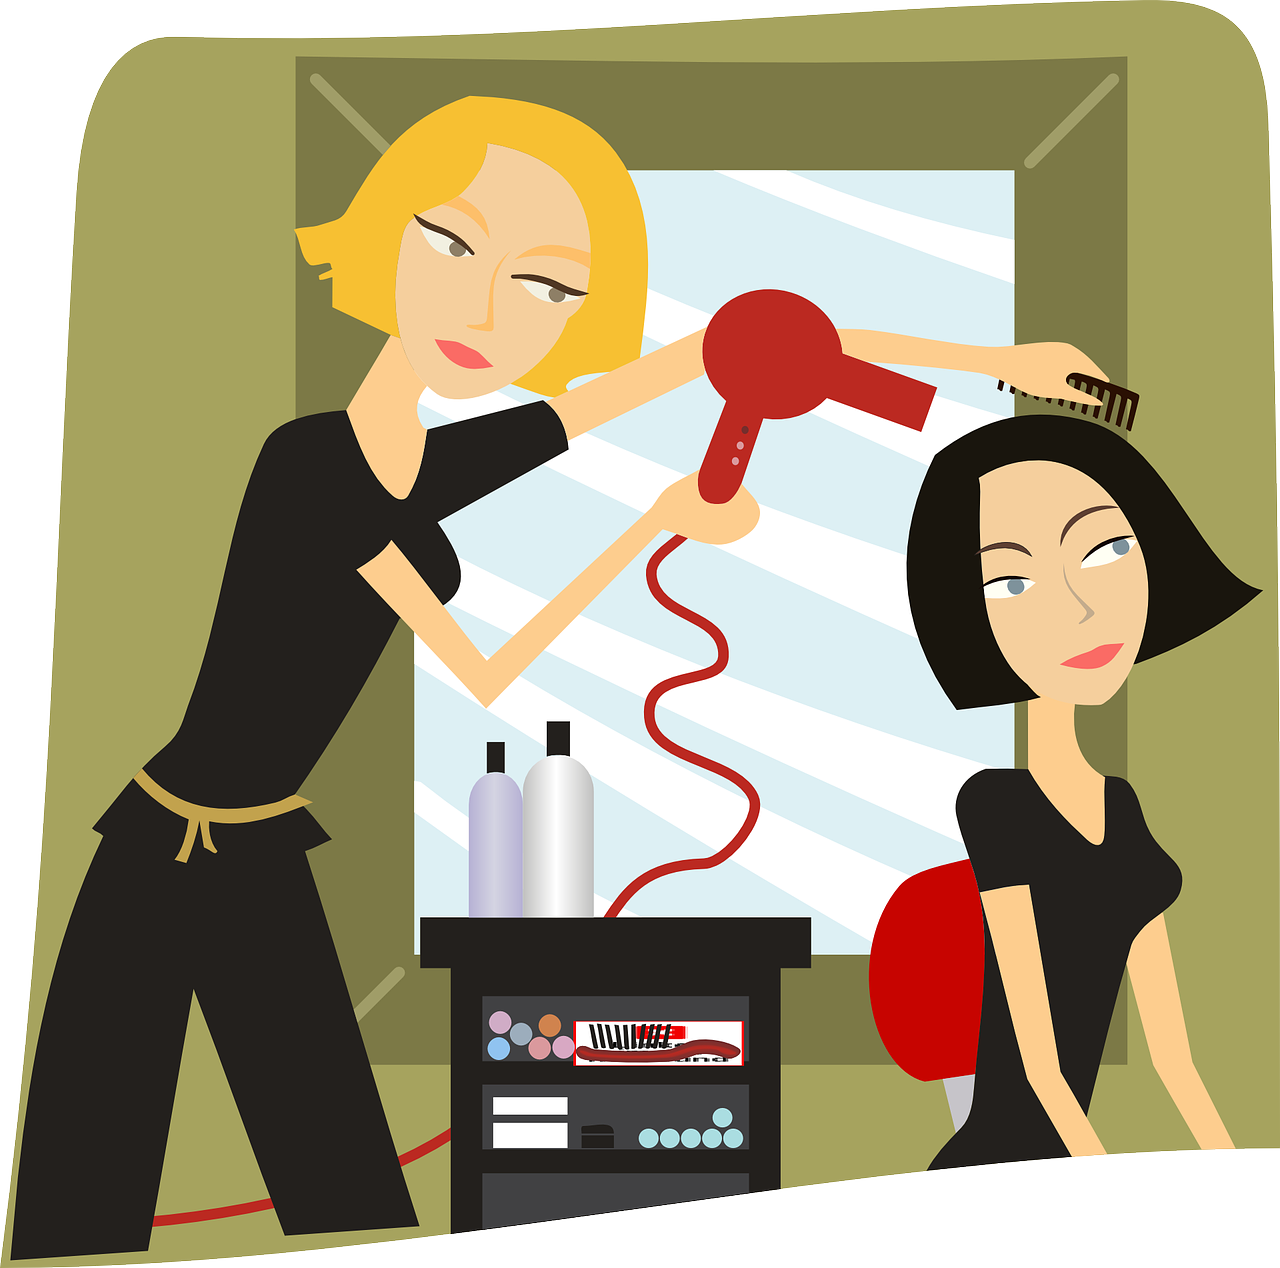 Hair Salon image of employee blow drying woman's hair